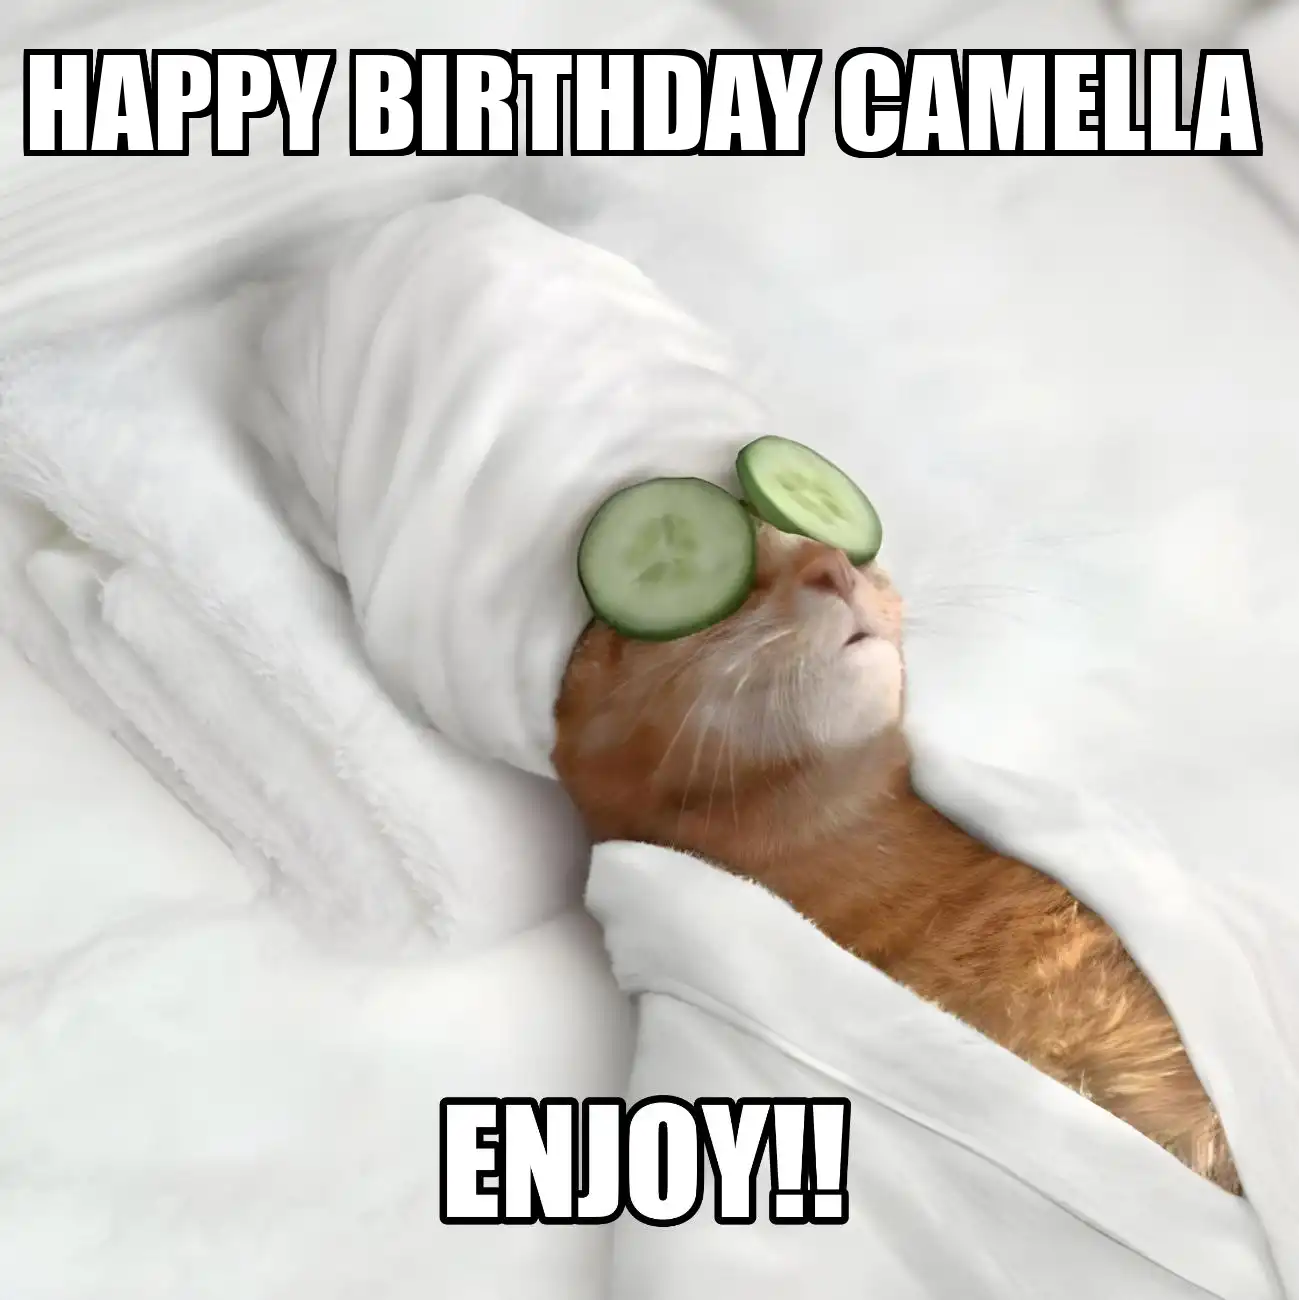 Happy Birthday Camella Enjoy Cat Meme